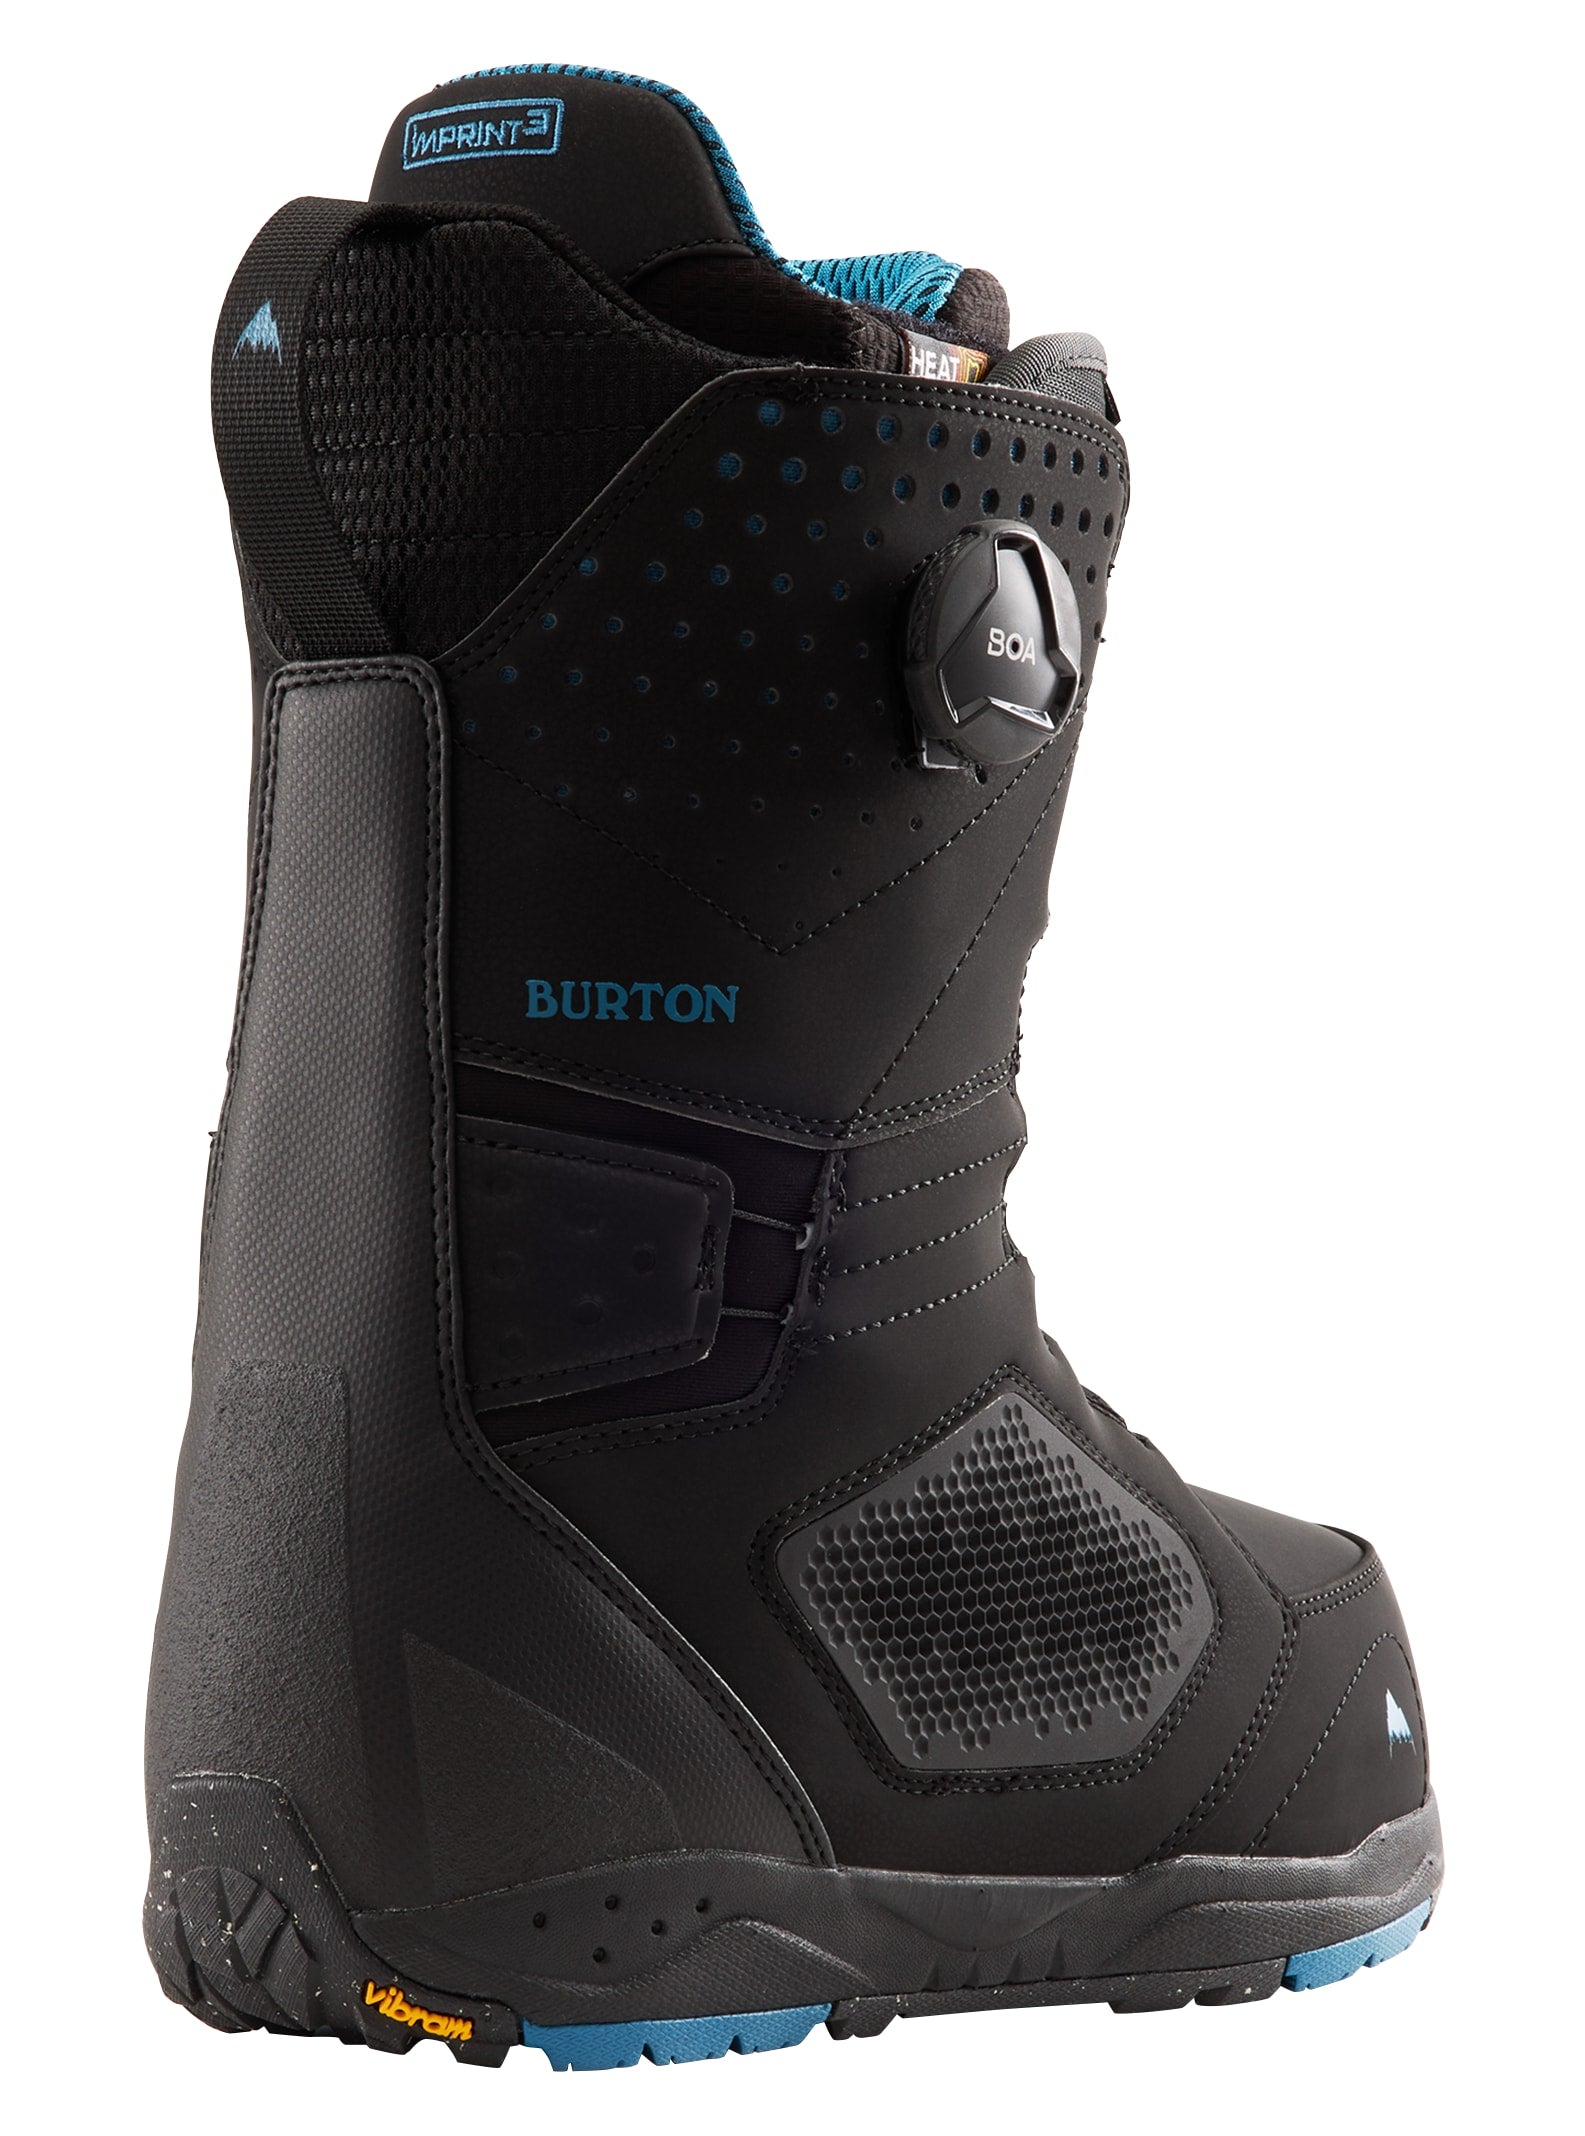 product image Men's Photon BOA® Snowboard Boots - Wide, Black